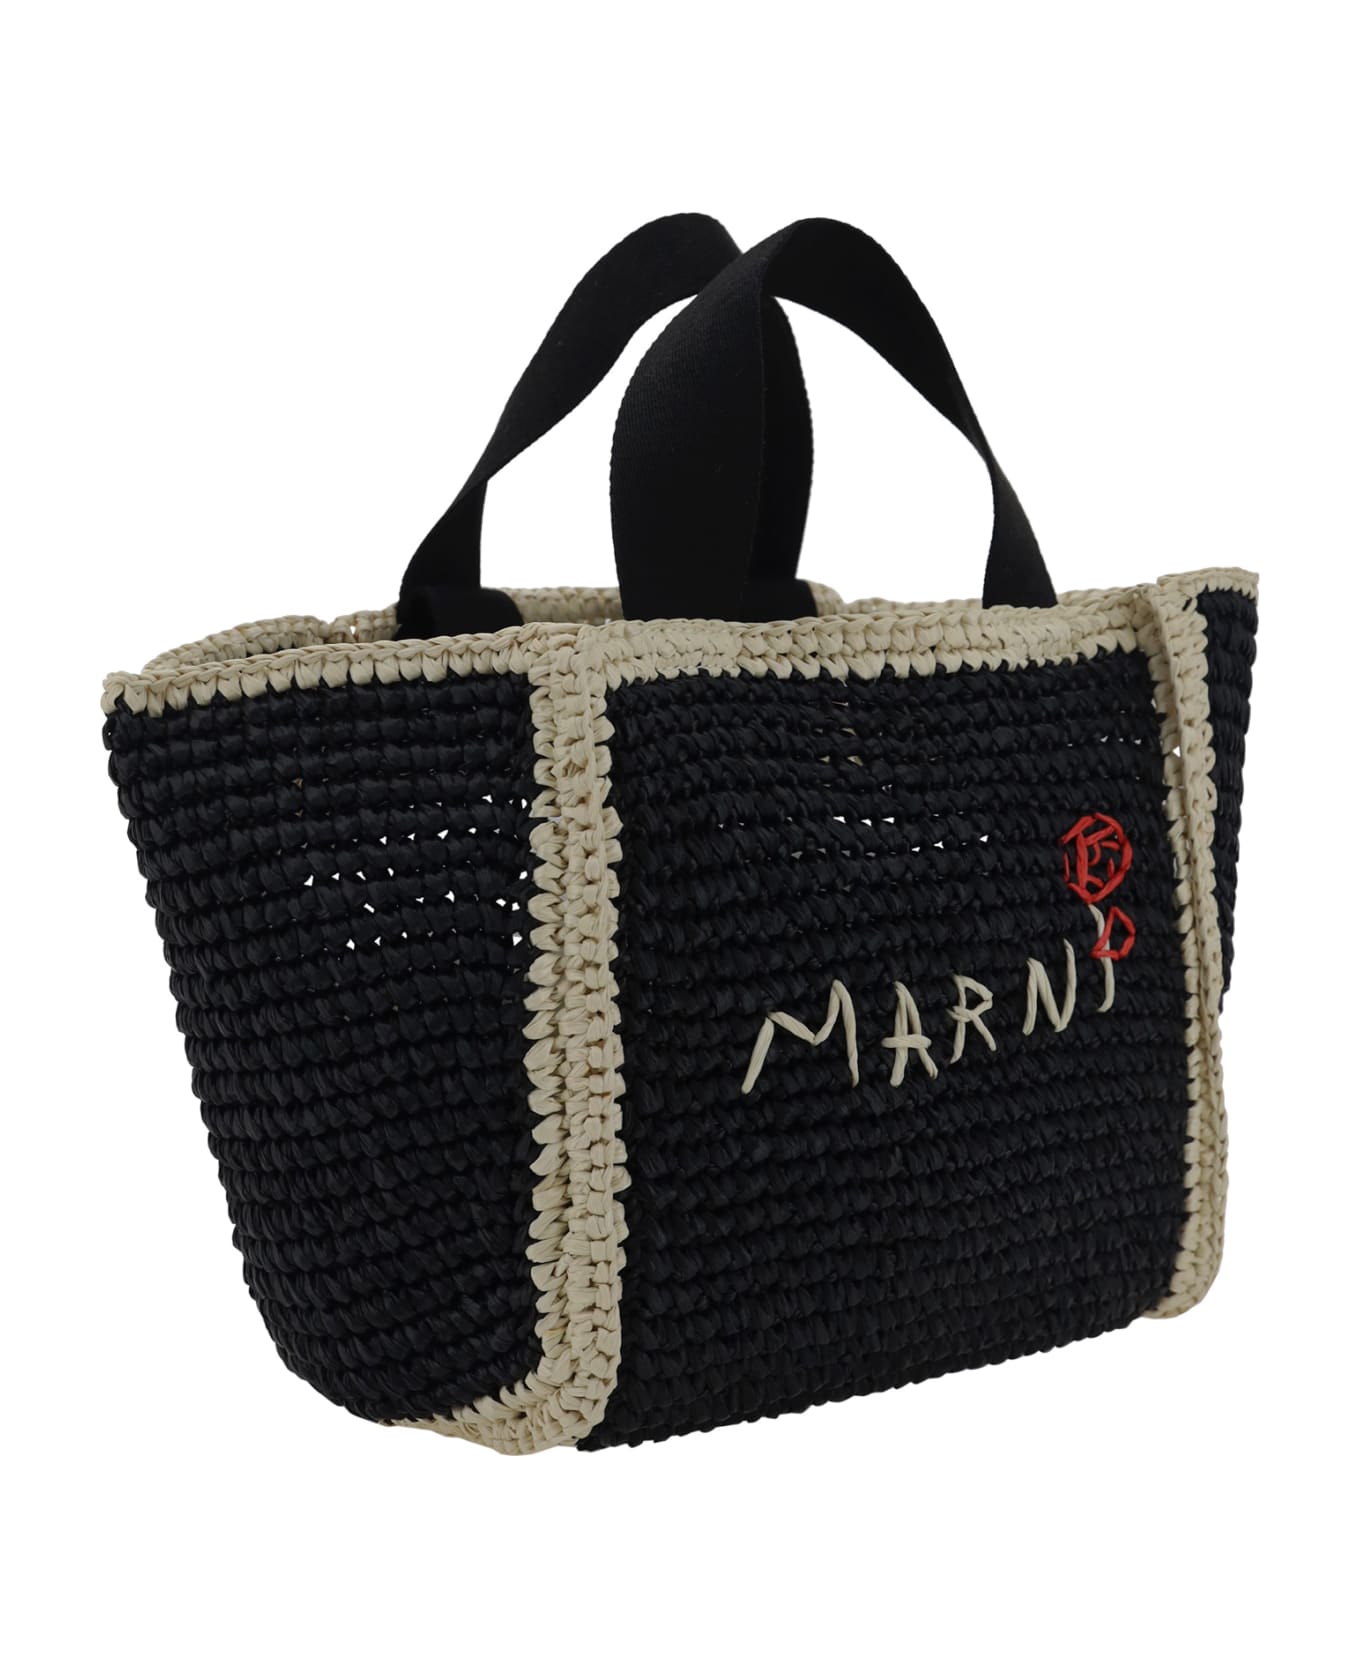 Marni Sillo Handbag - Black/ivory/black